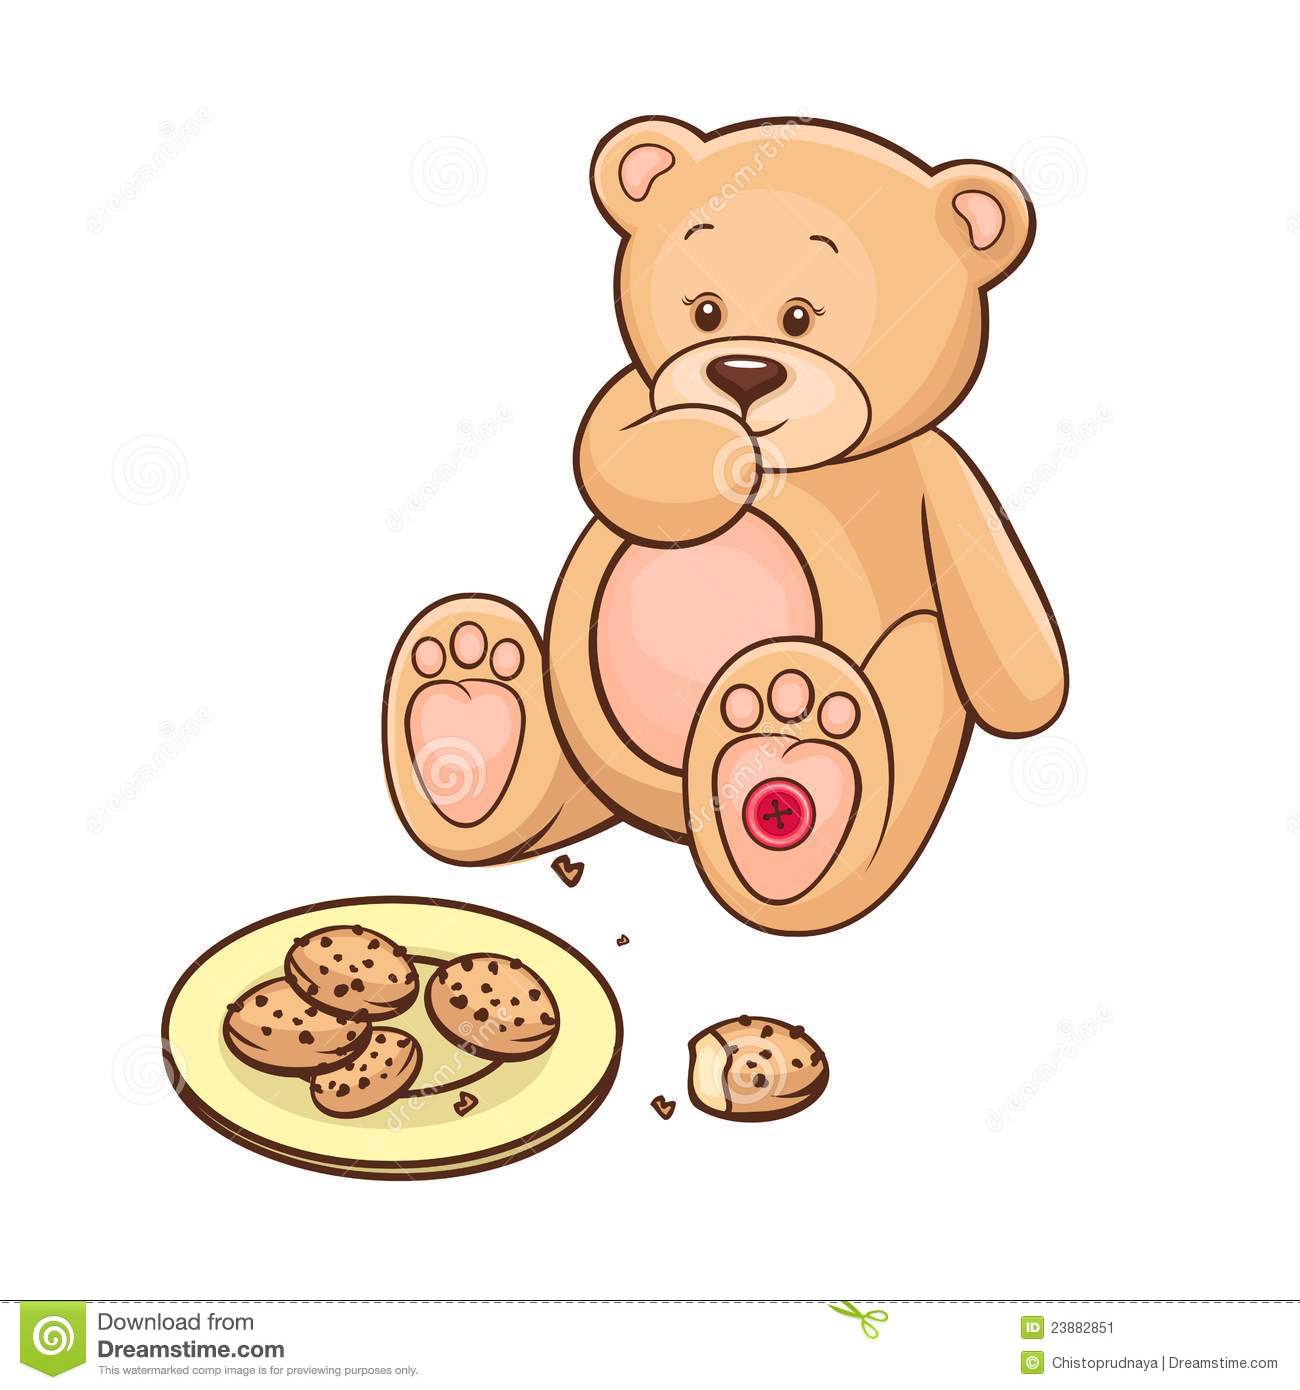 Teddy Bear Eating Cookies Stock Image   Image  23882851